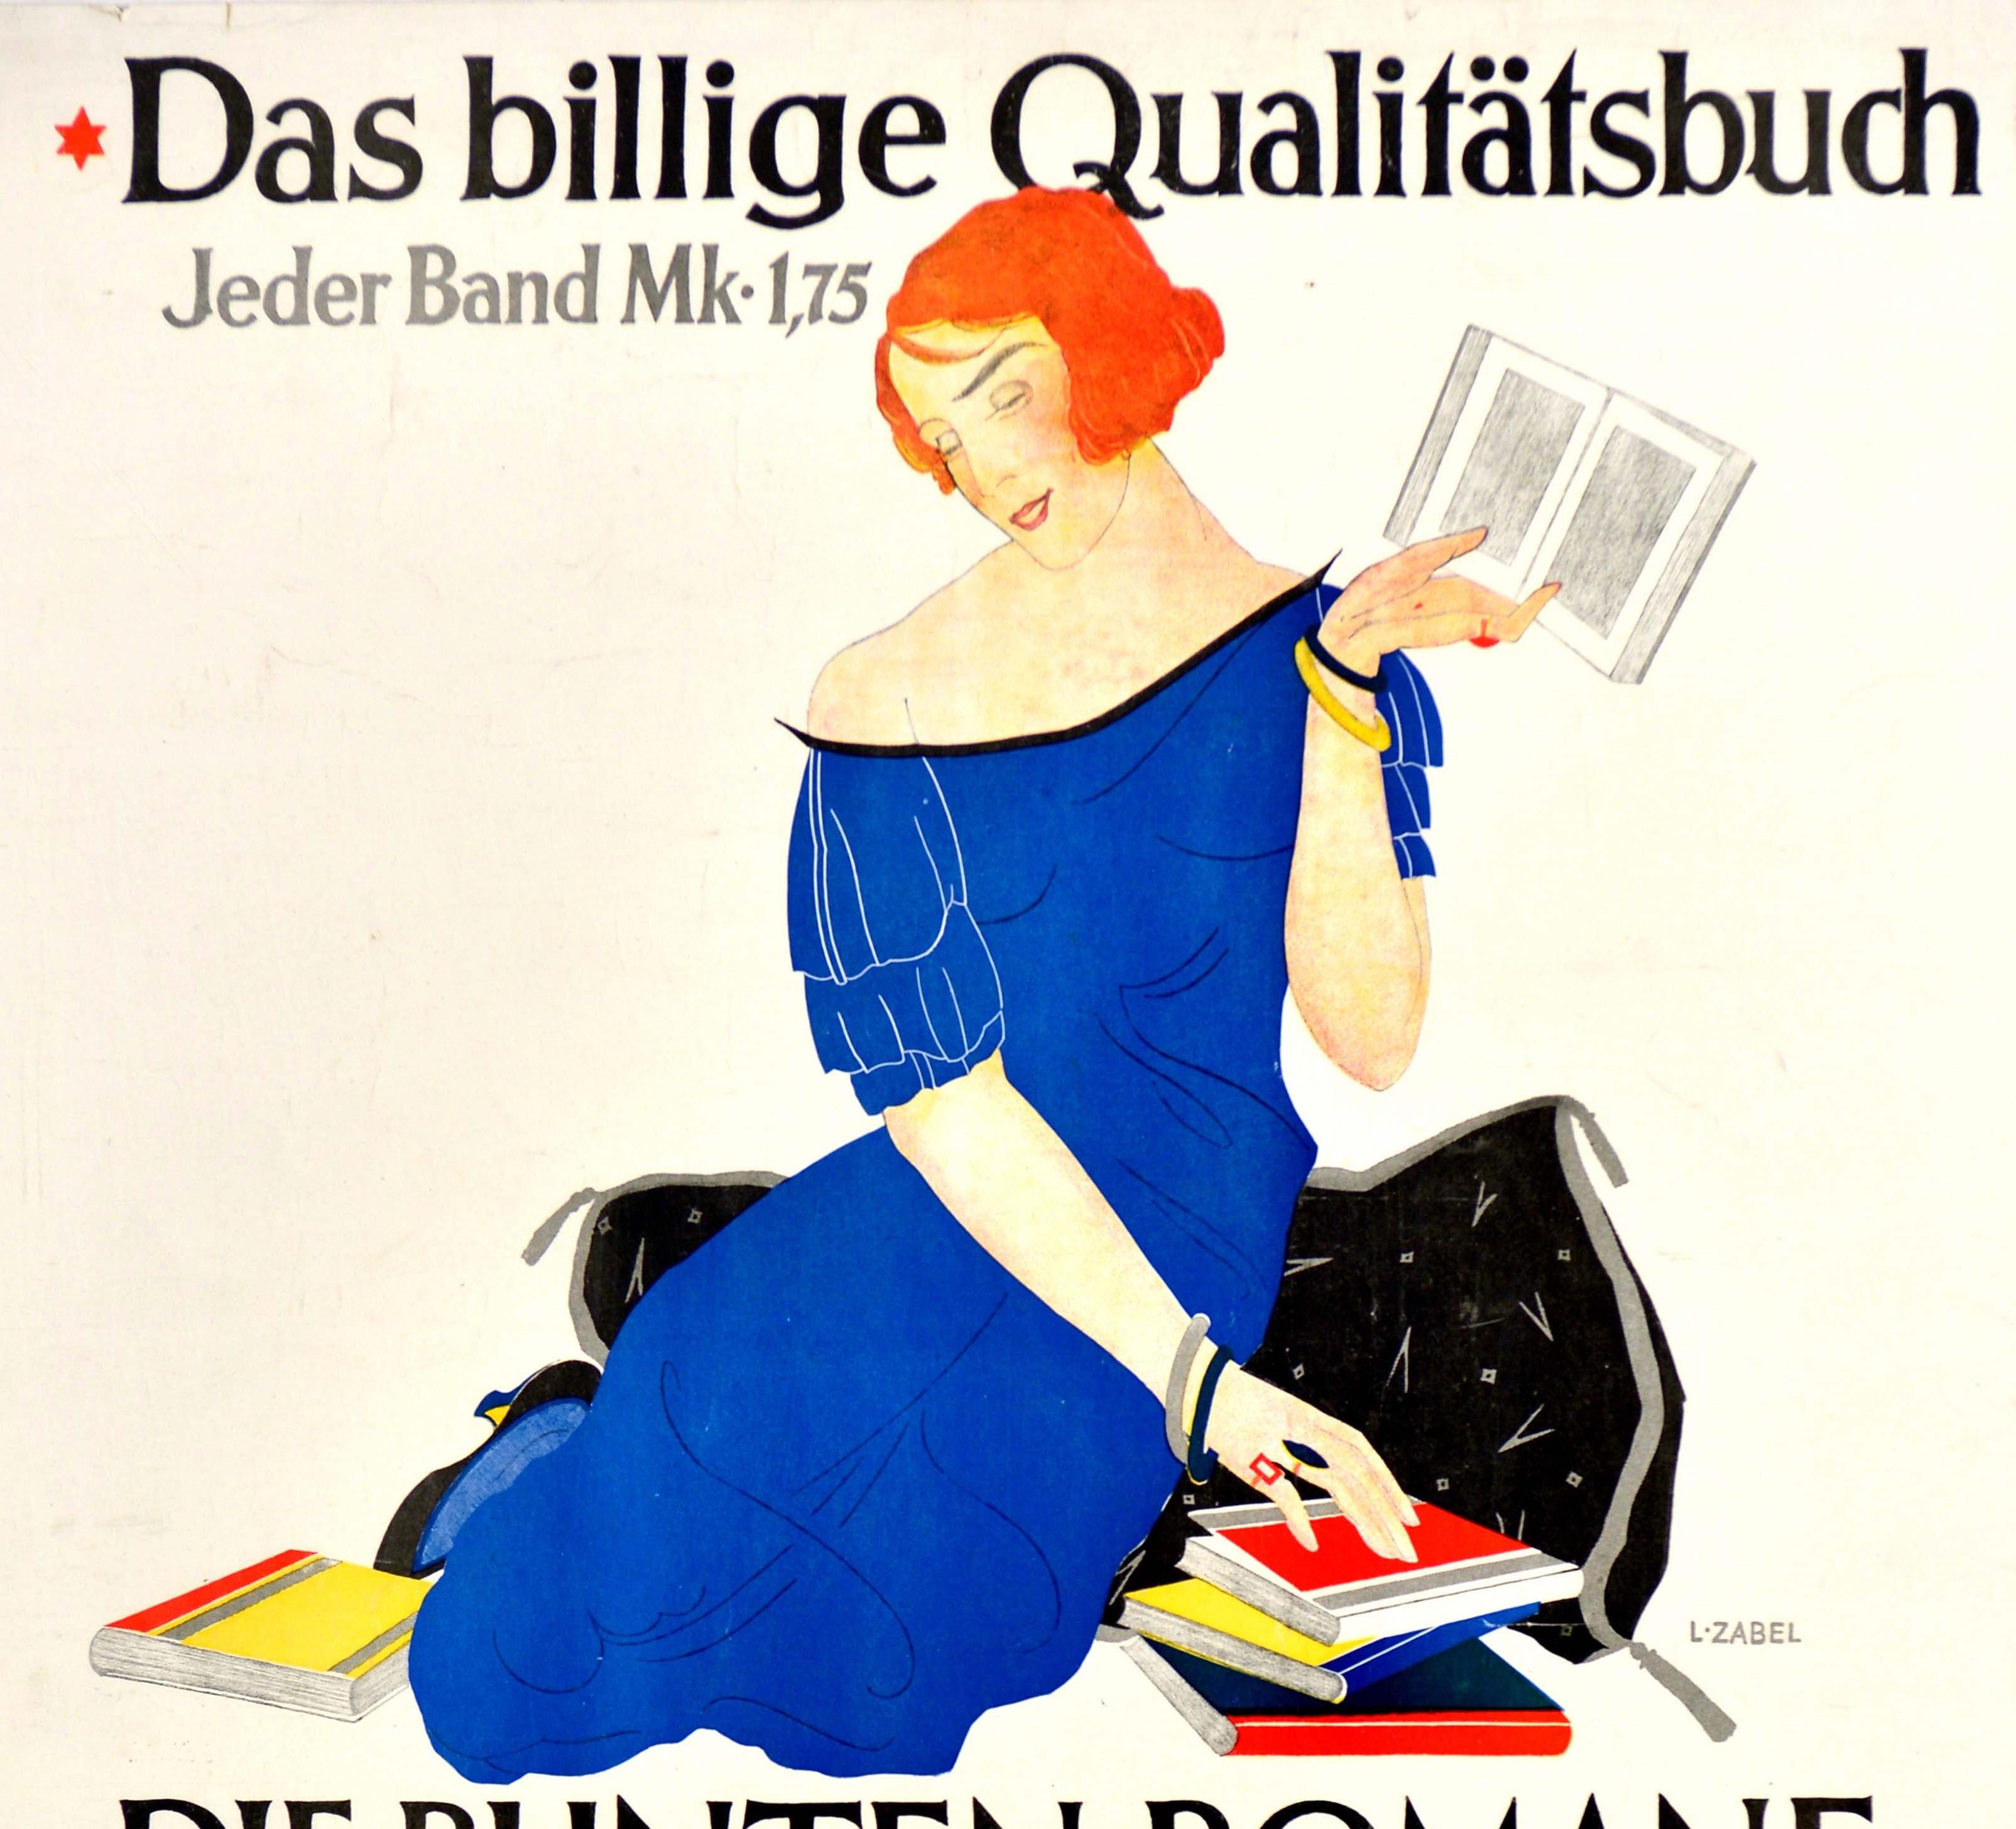 Original Vintage Posters Quality Books Oscar Wilde Gustave Flaubert Roman Bucher - Print by L. Zabel